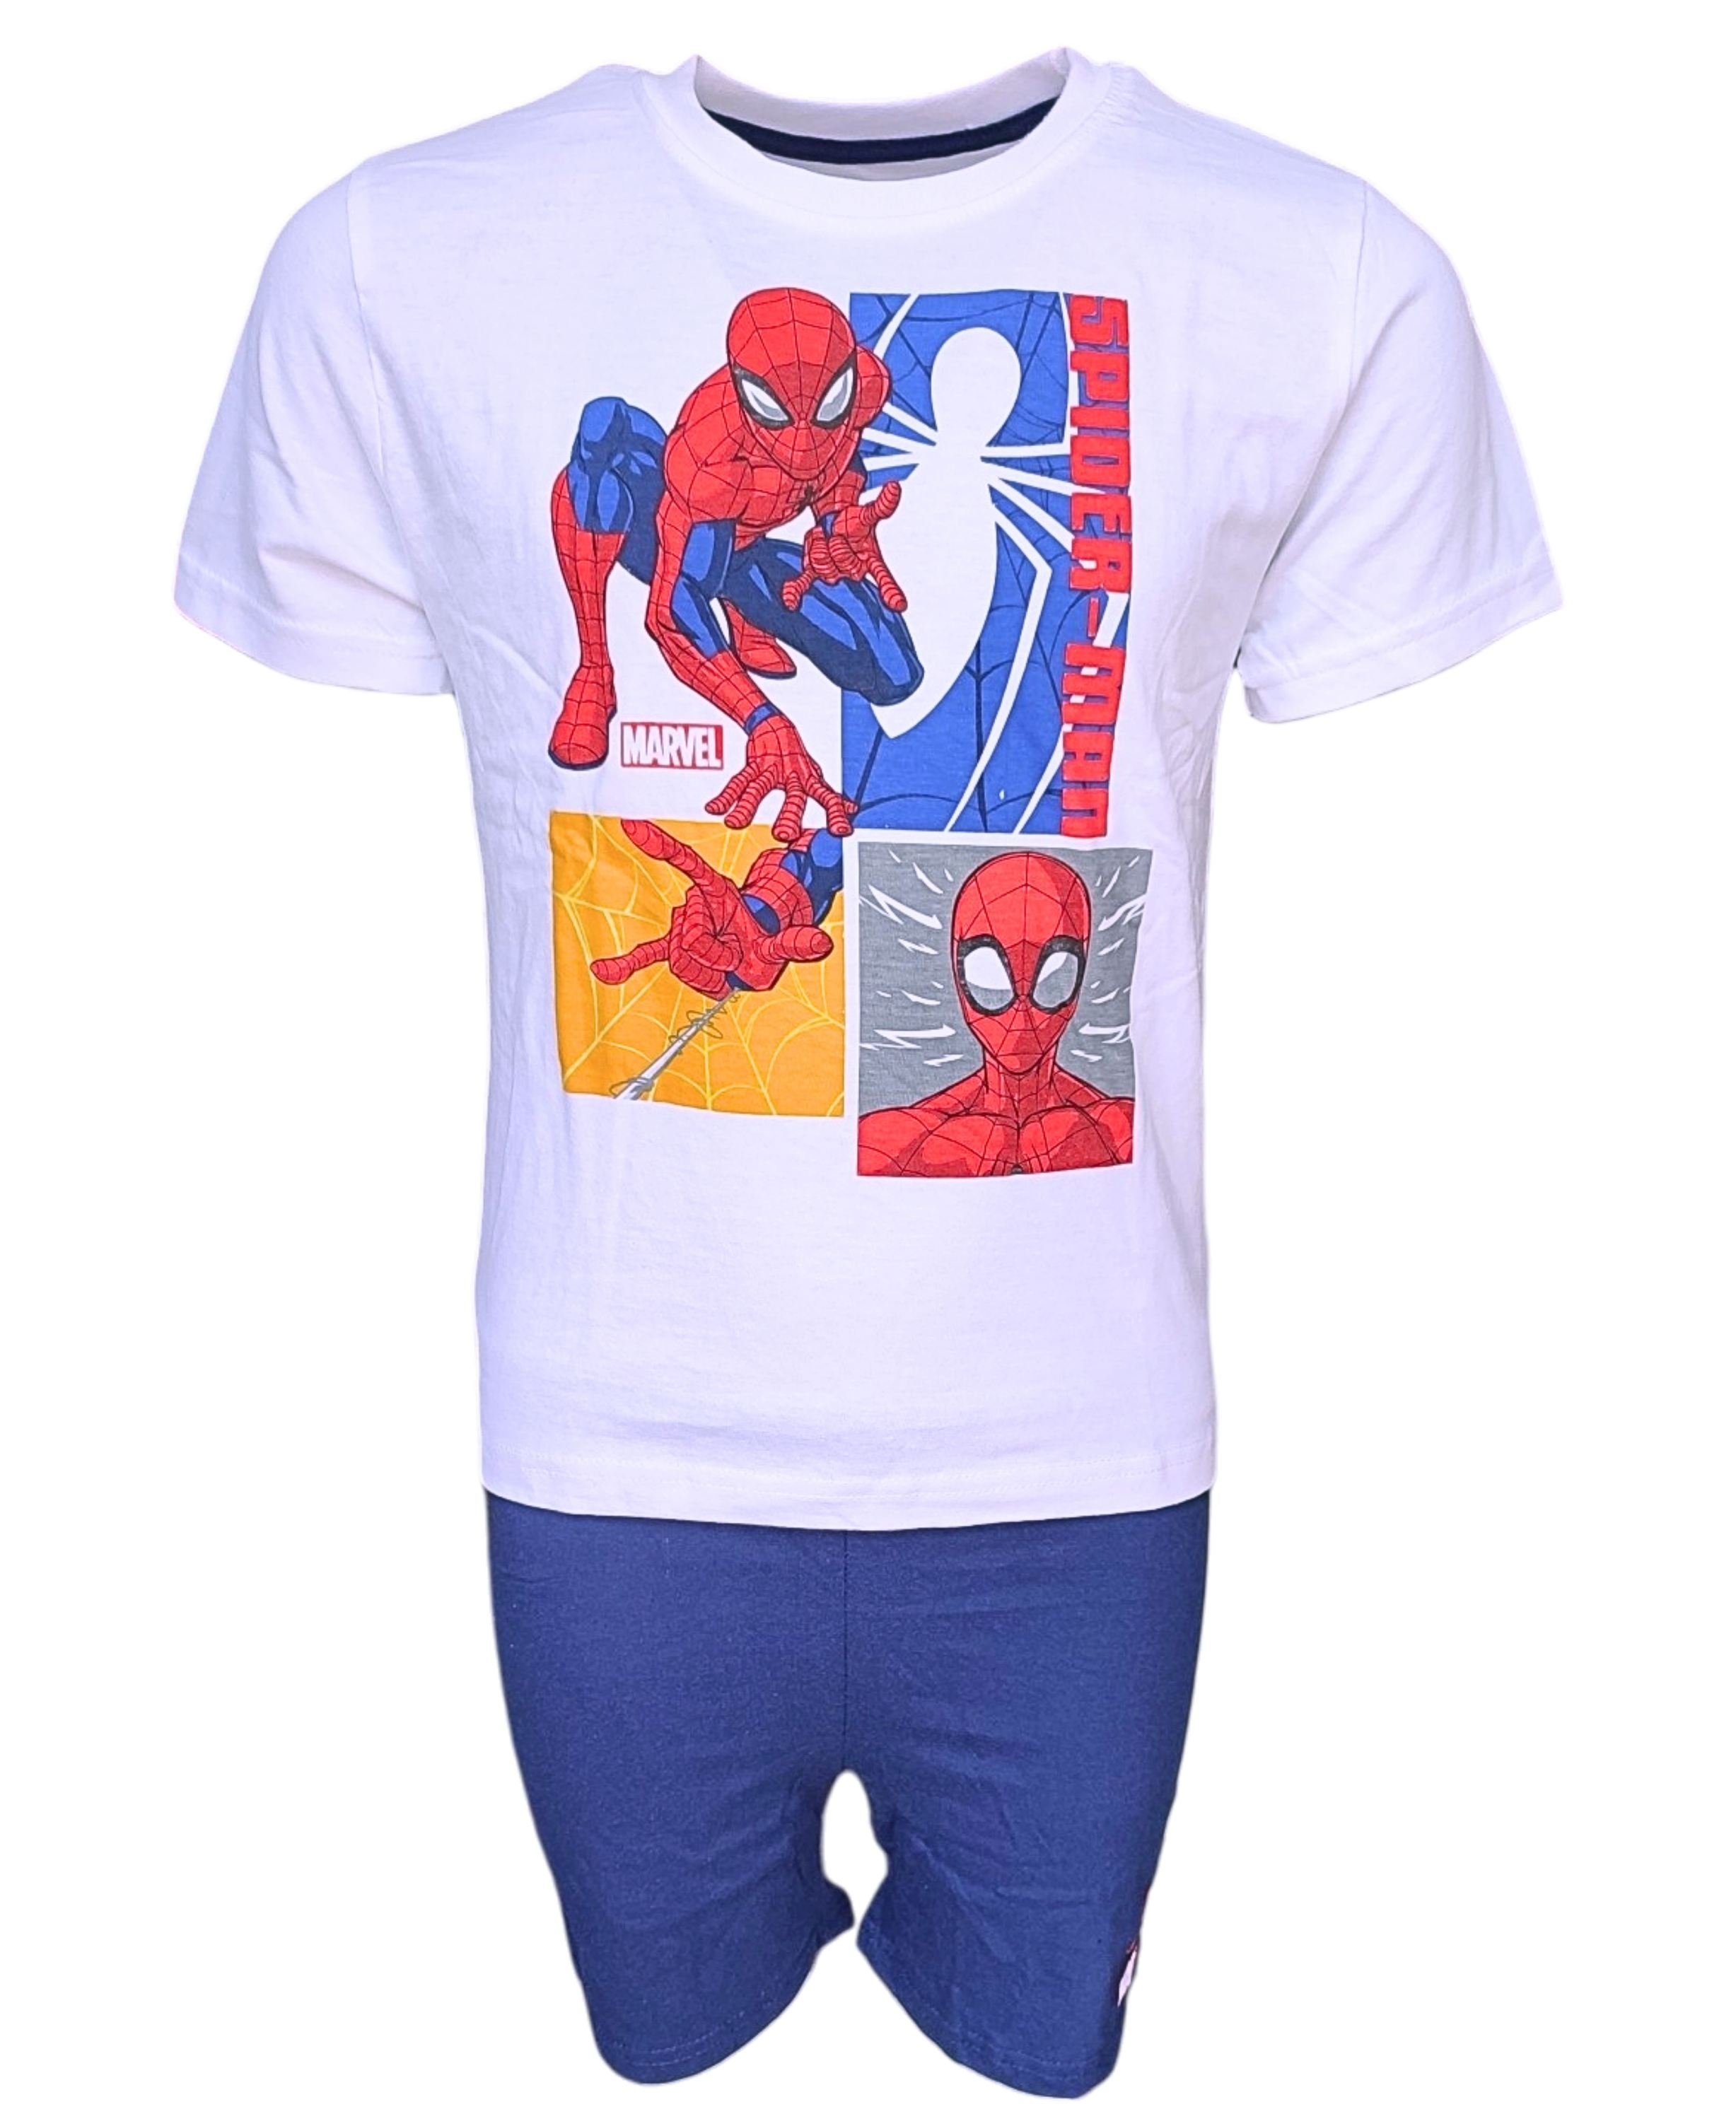 Spiderman Schlafanzug Marvel (2 tlg) Jungen Pyjama Set kurz - Kinder Shorty Gr. 104 - 134 cm